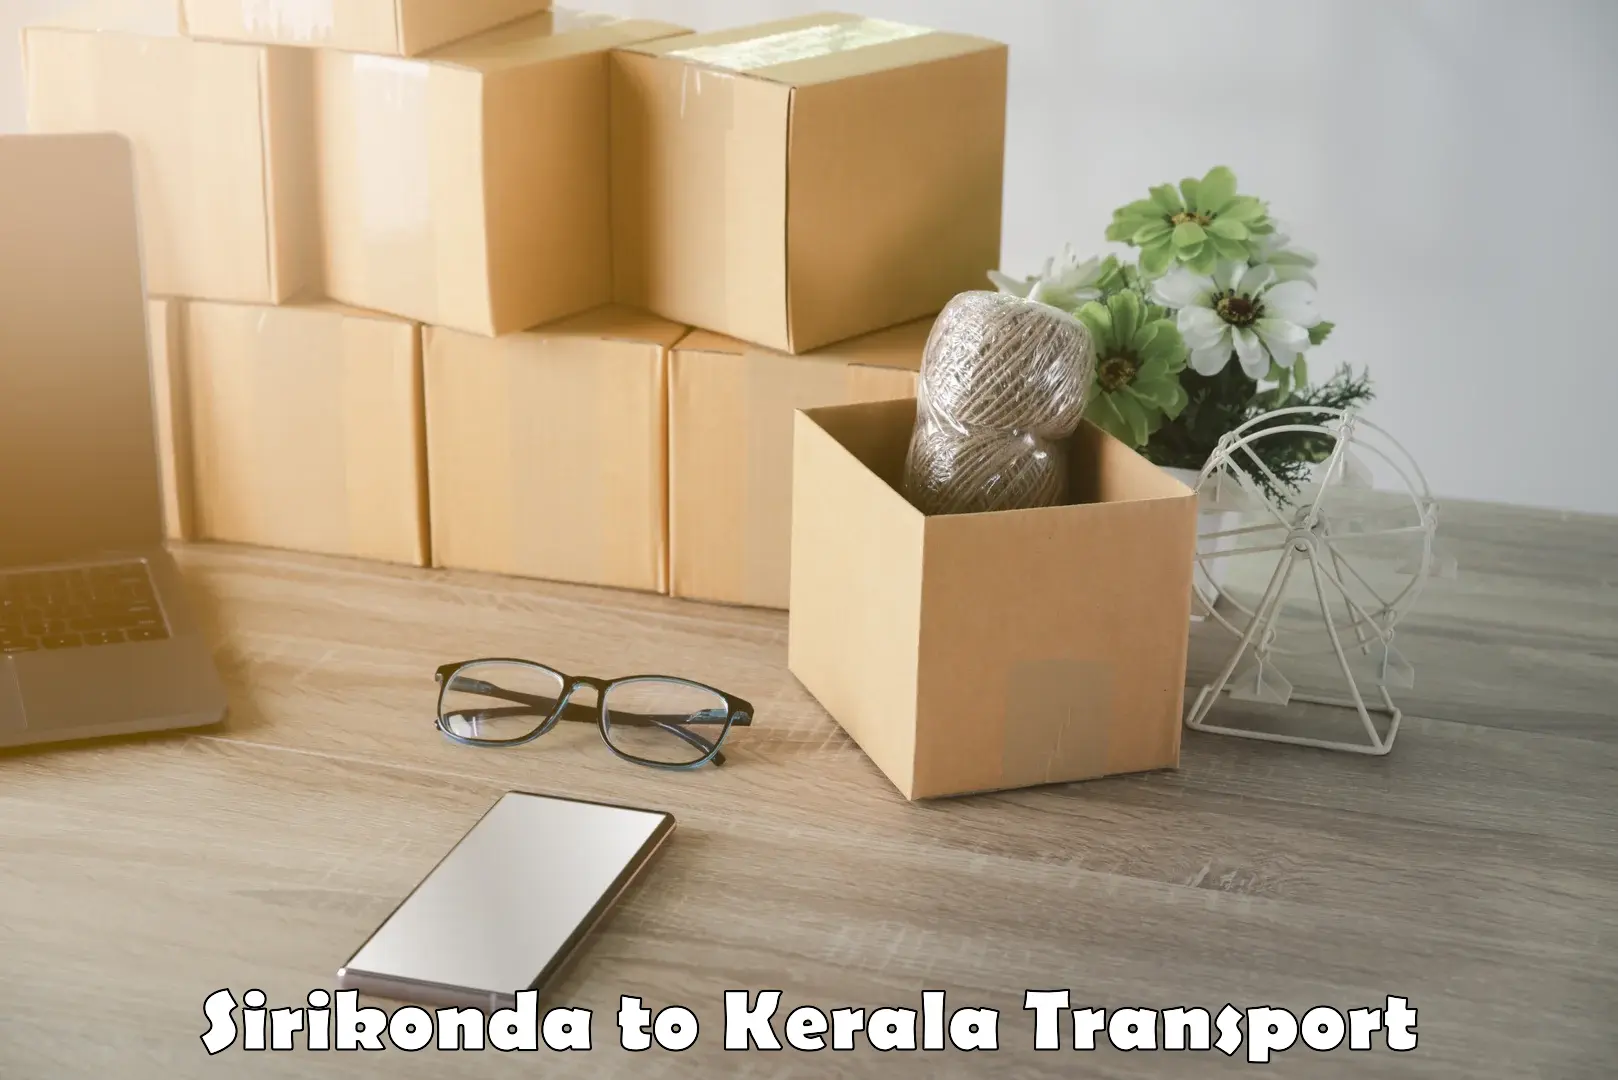 Transport in sharing Sirikonda to Parappa